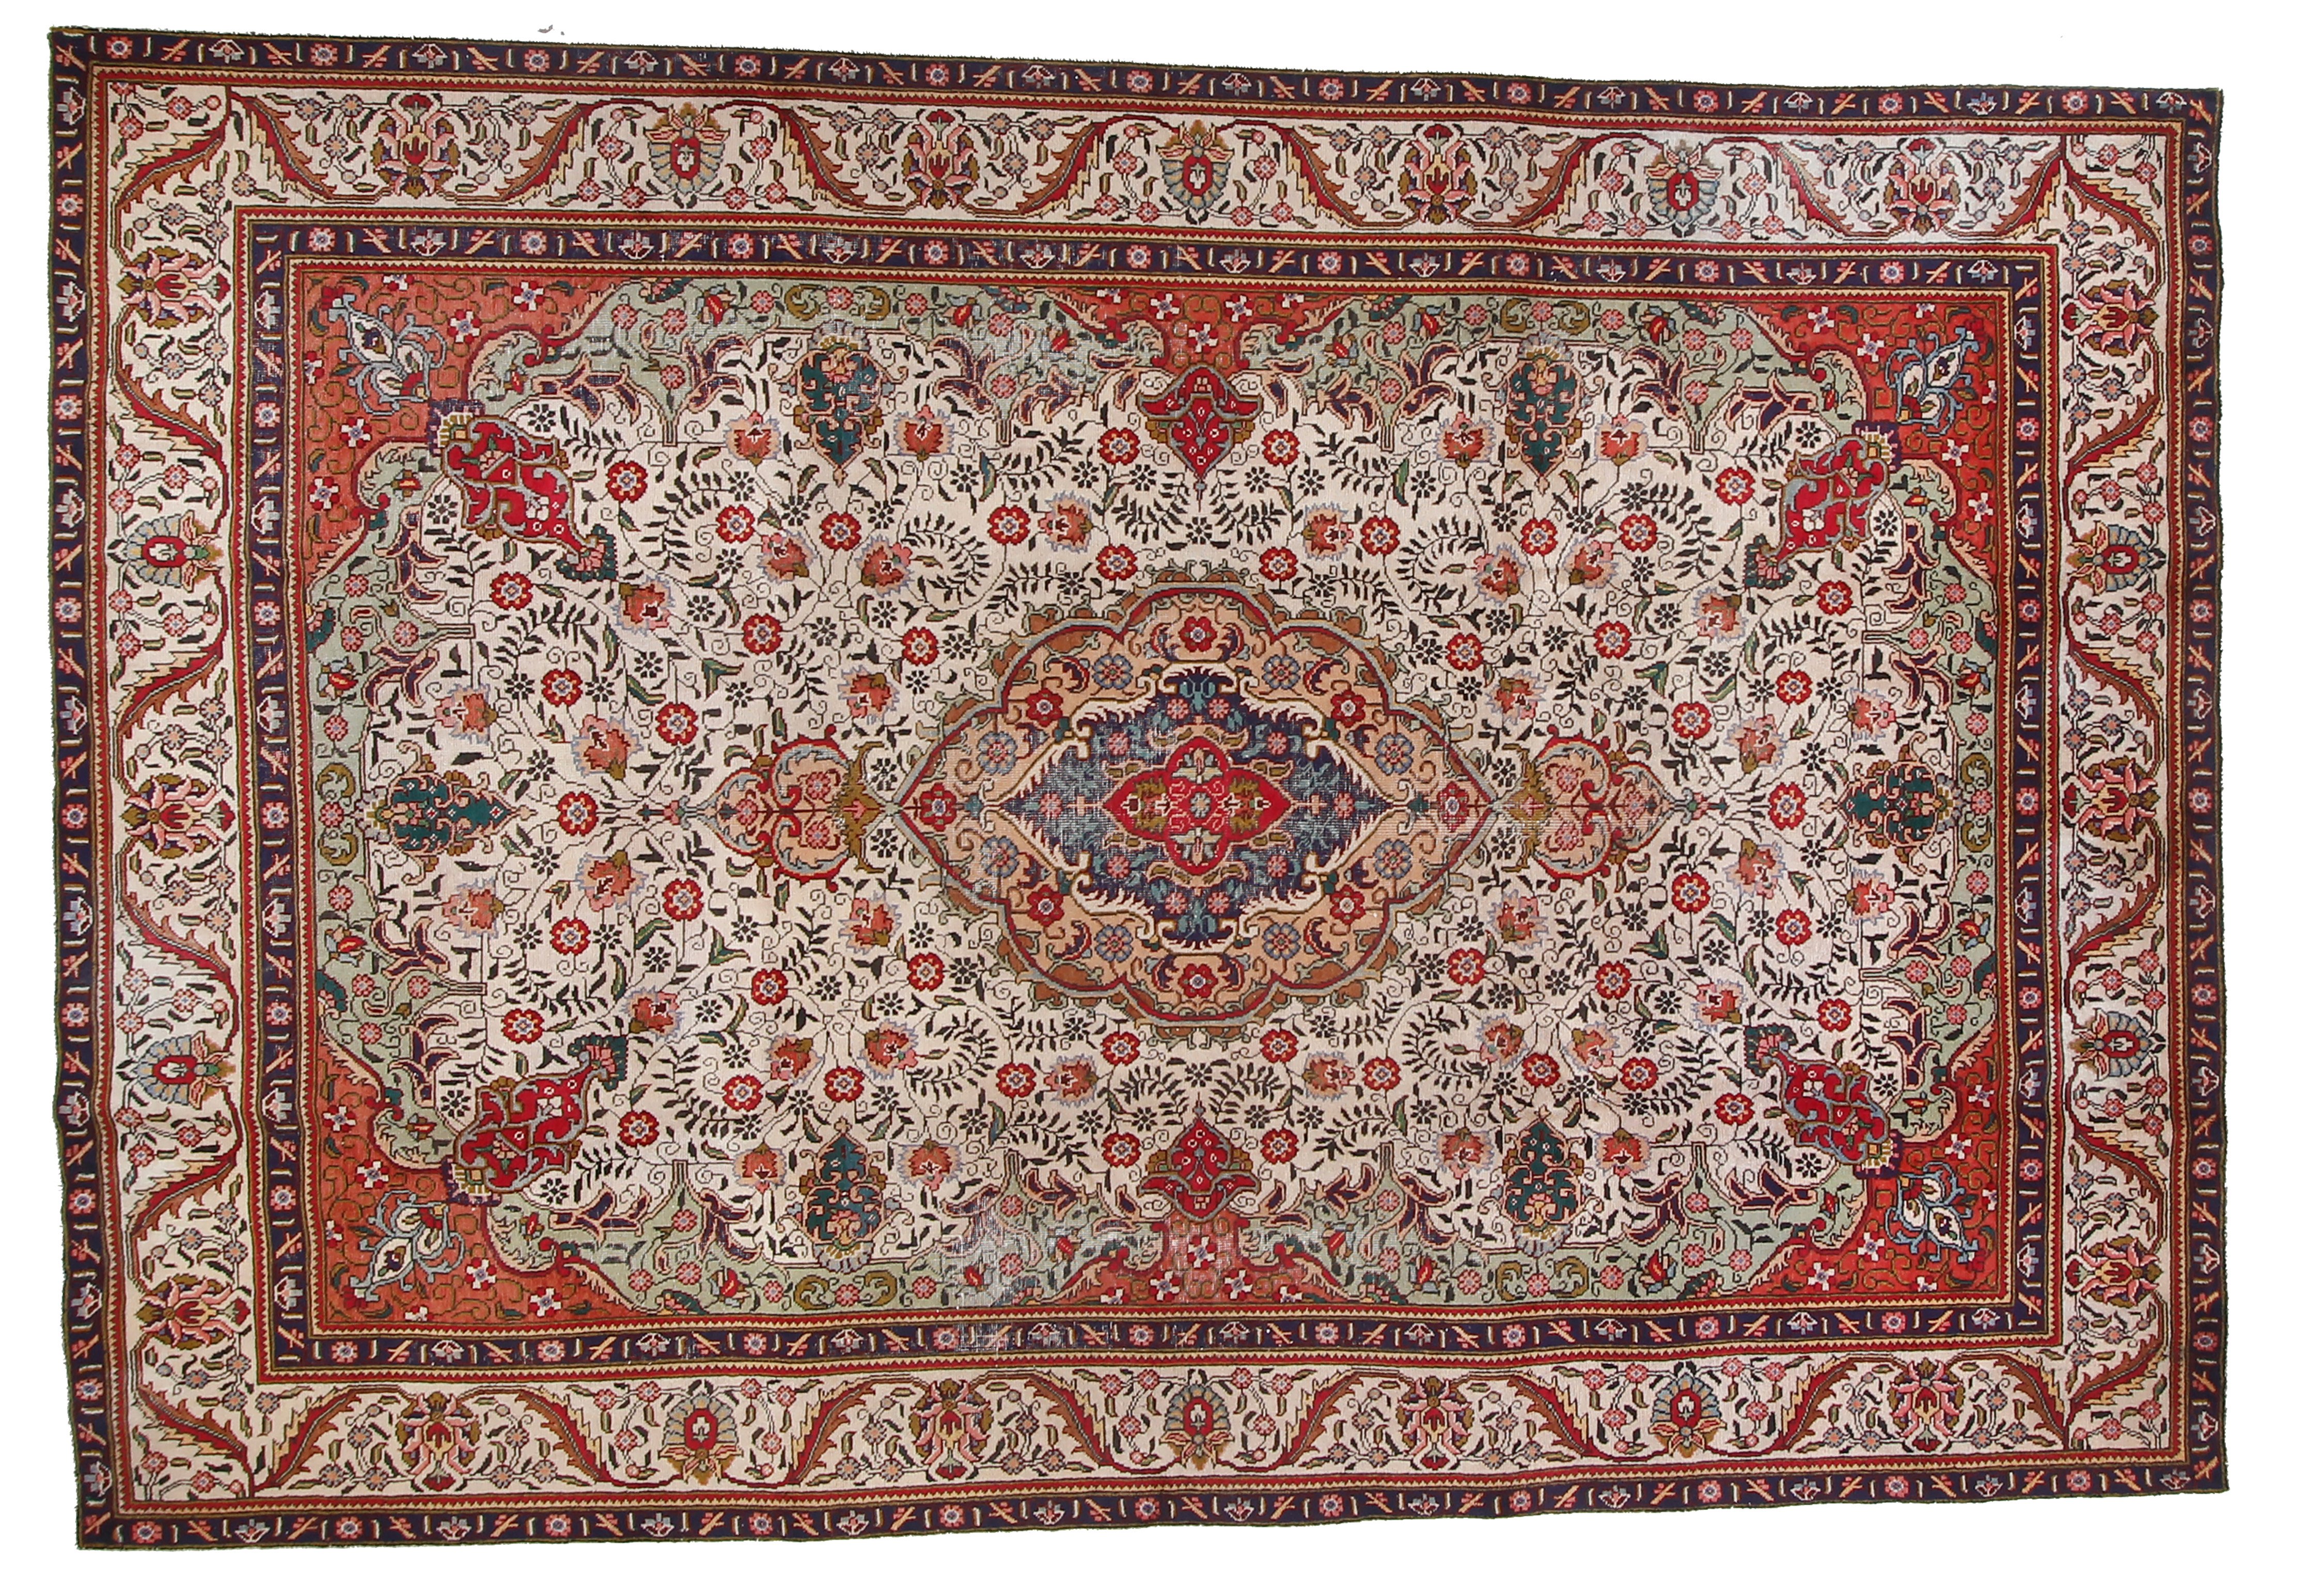 7'11" x 11'4" Vintage Persian Rug~P77613244